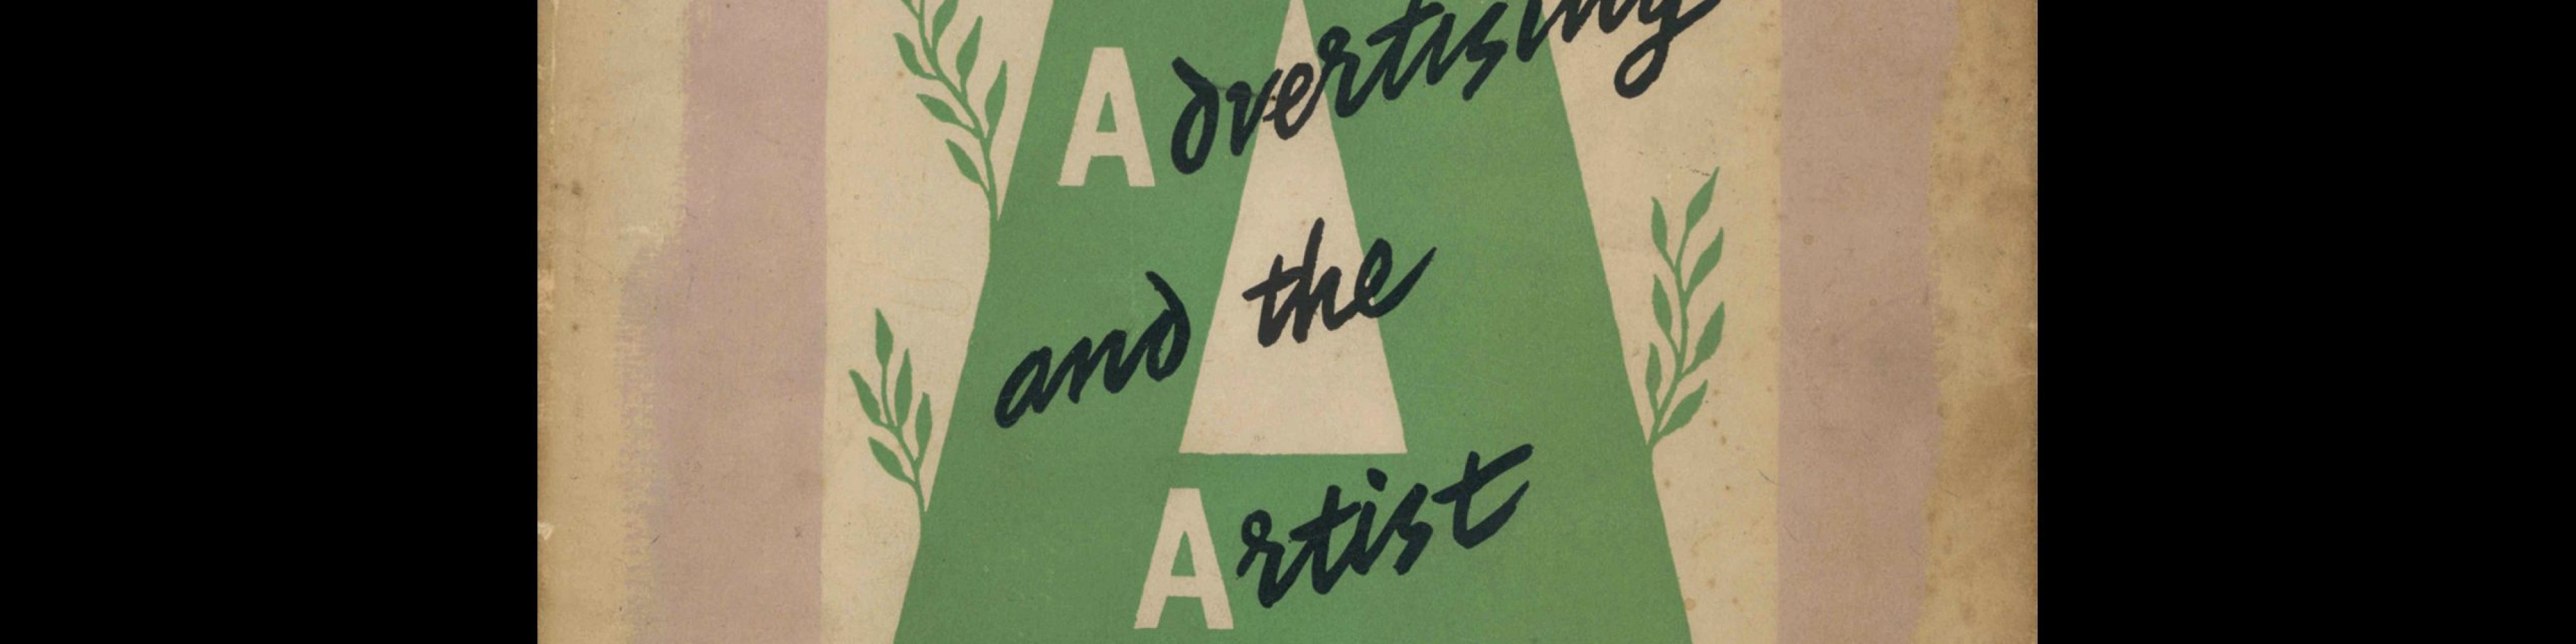 Advertising and the Artist, Ashley Havinden, 1956